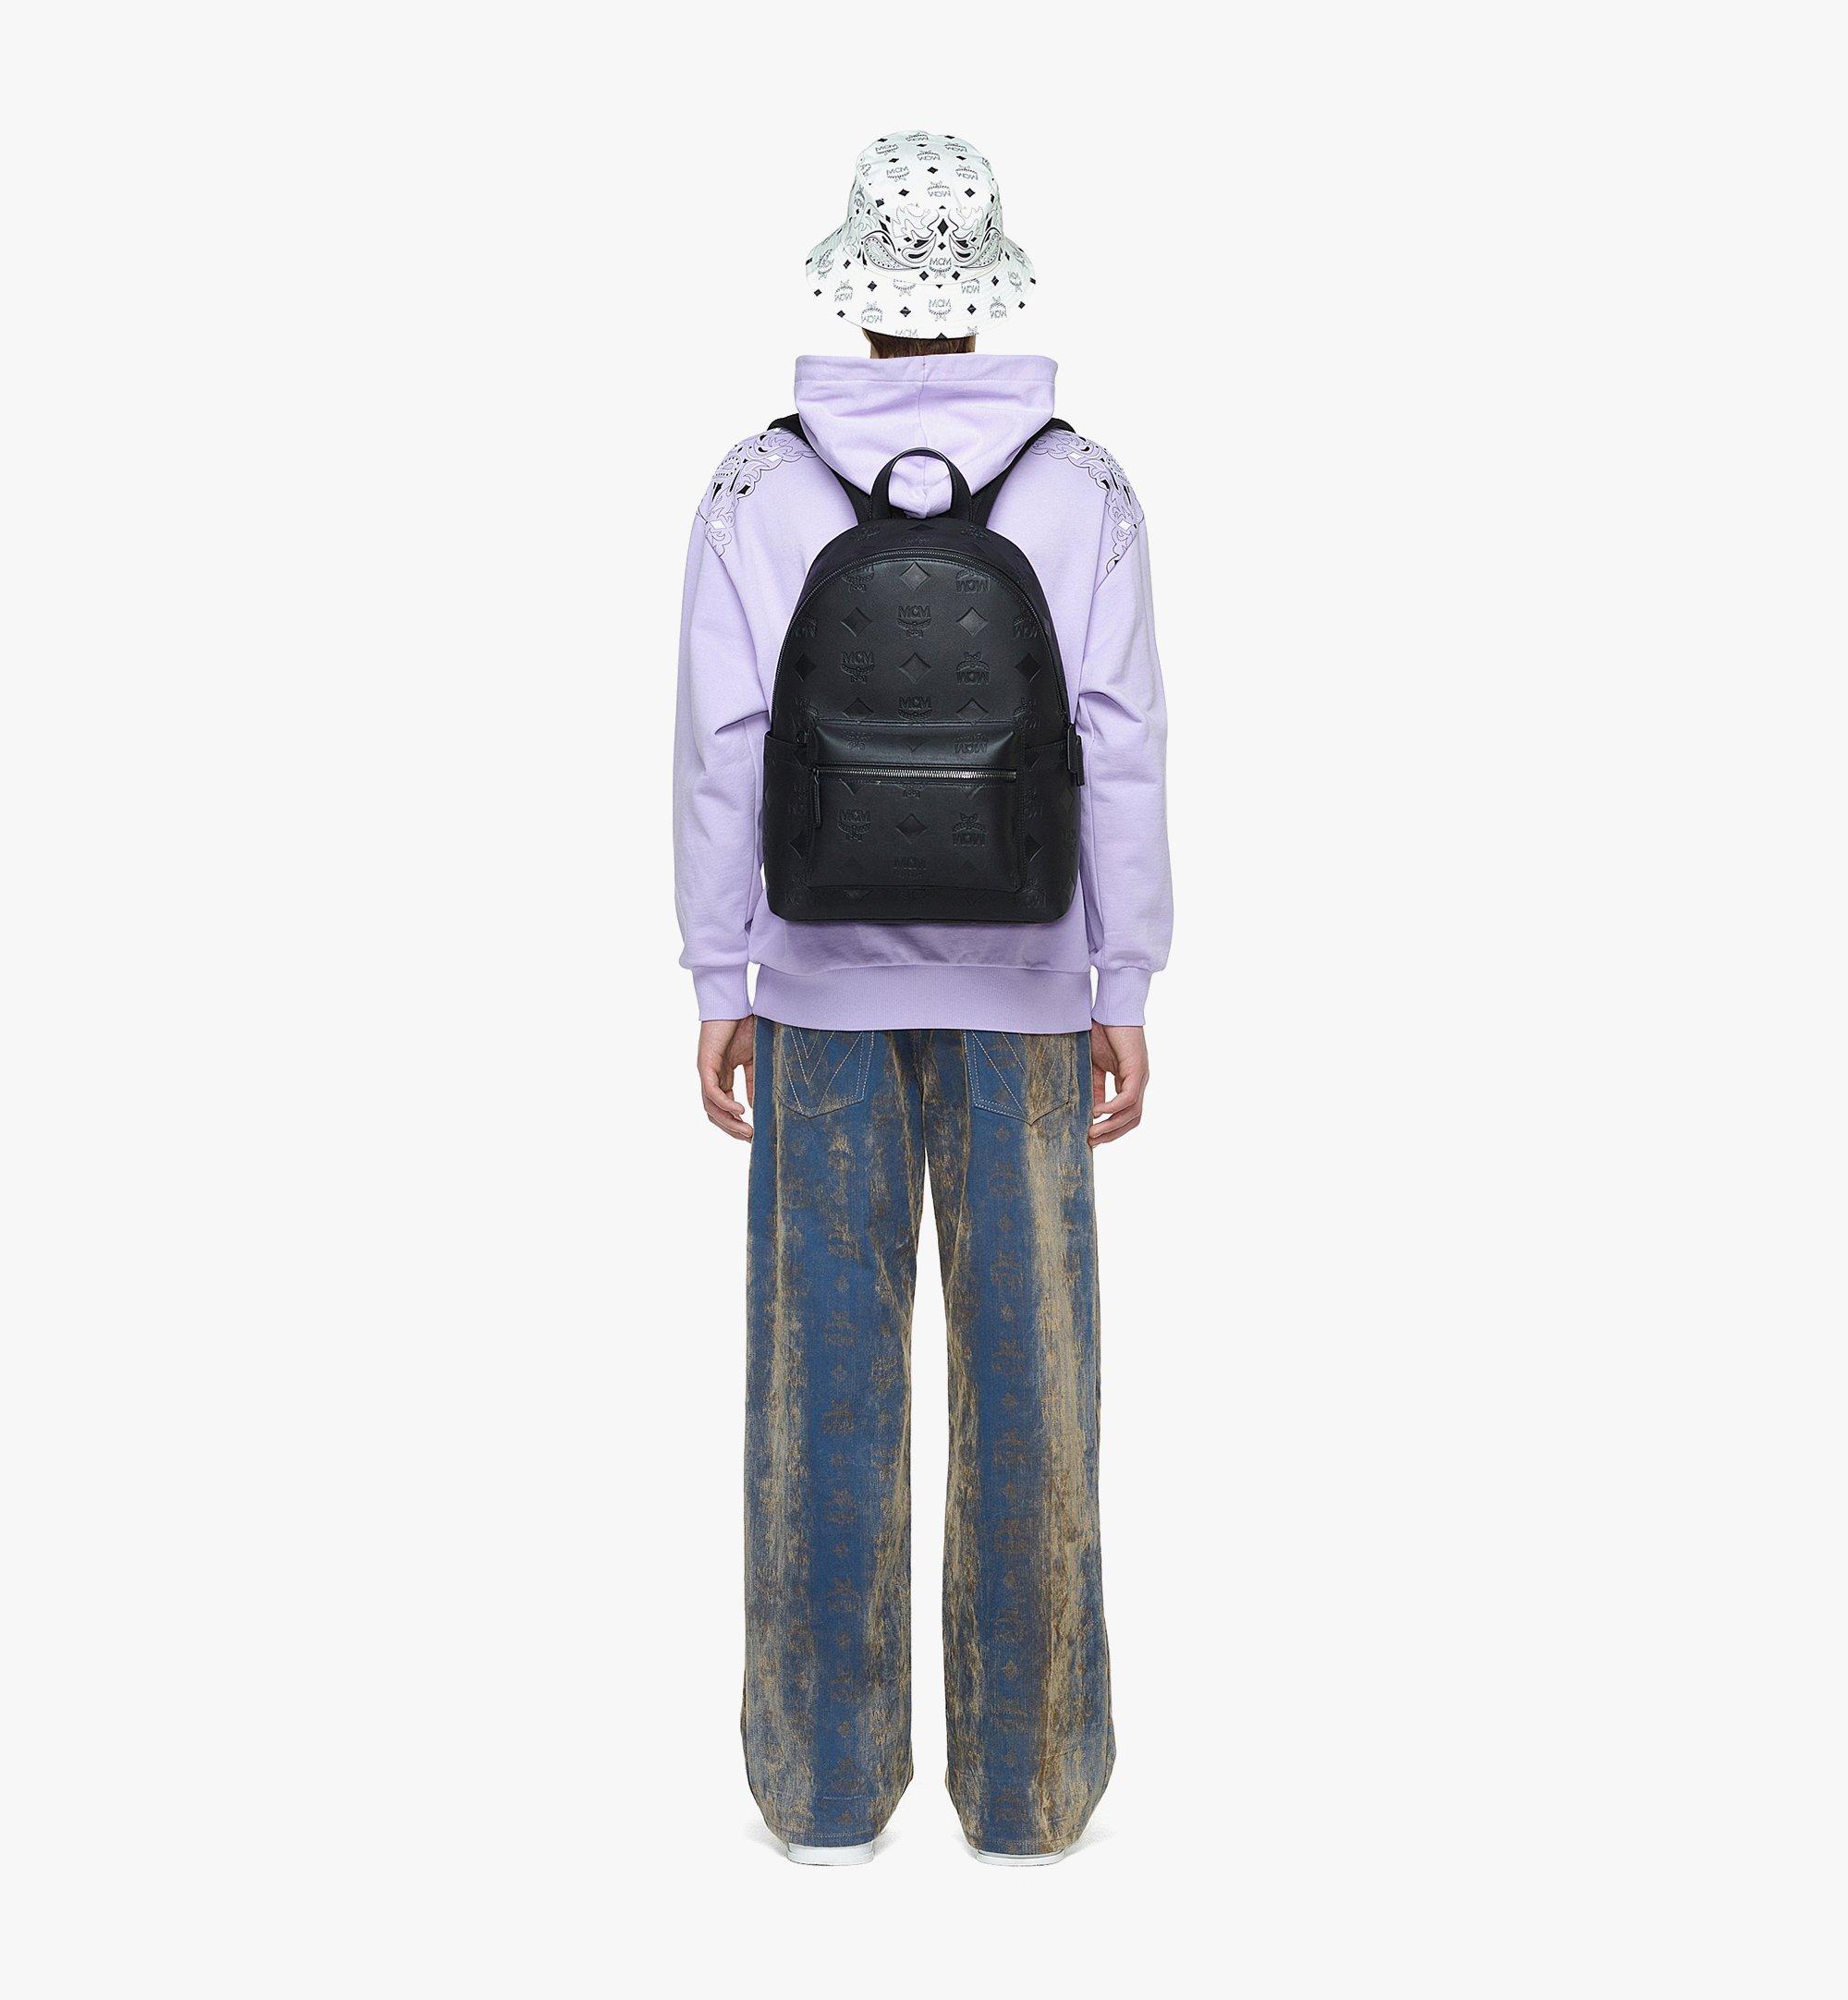 Medium Stark Backpack in Maxi Monogram Leather Black | MCM ®CA